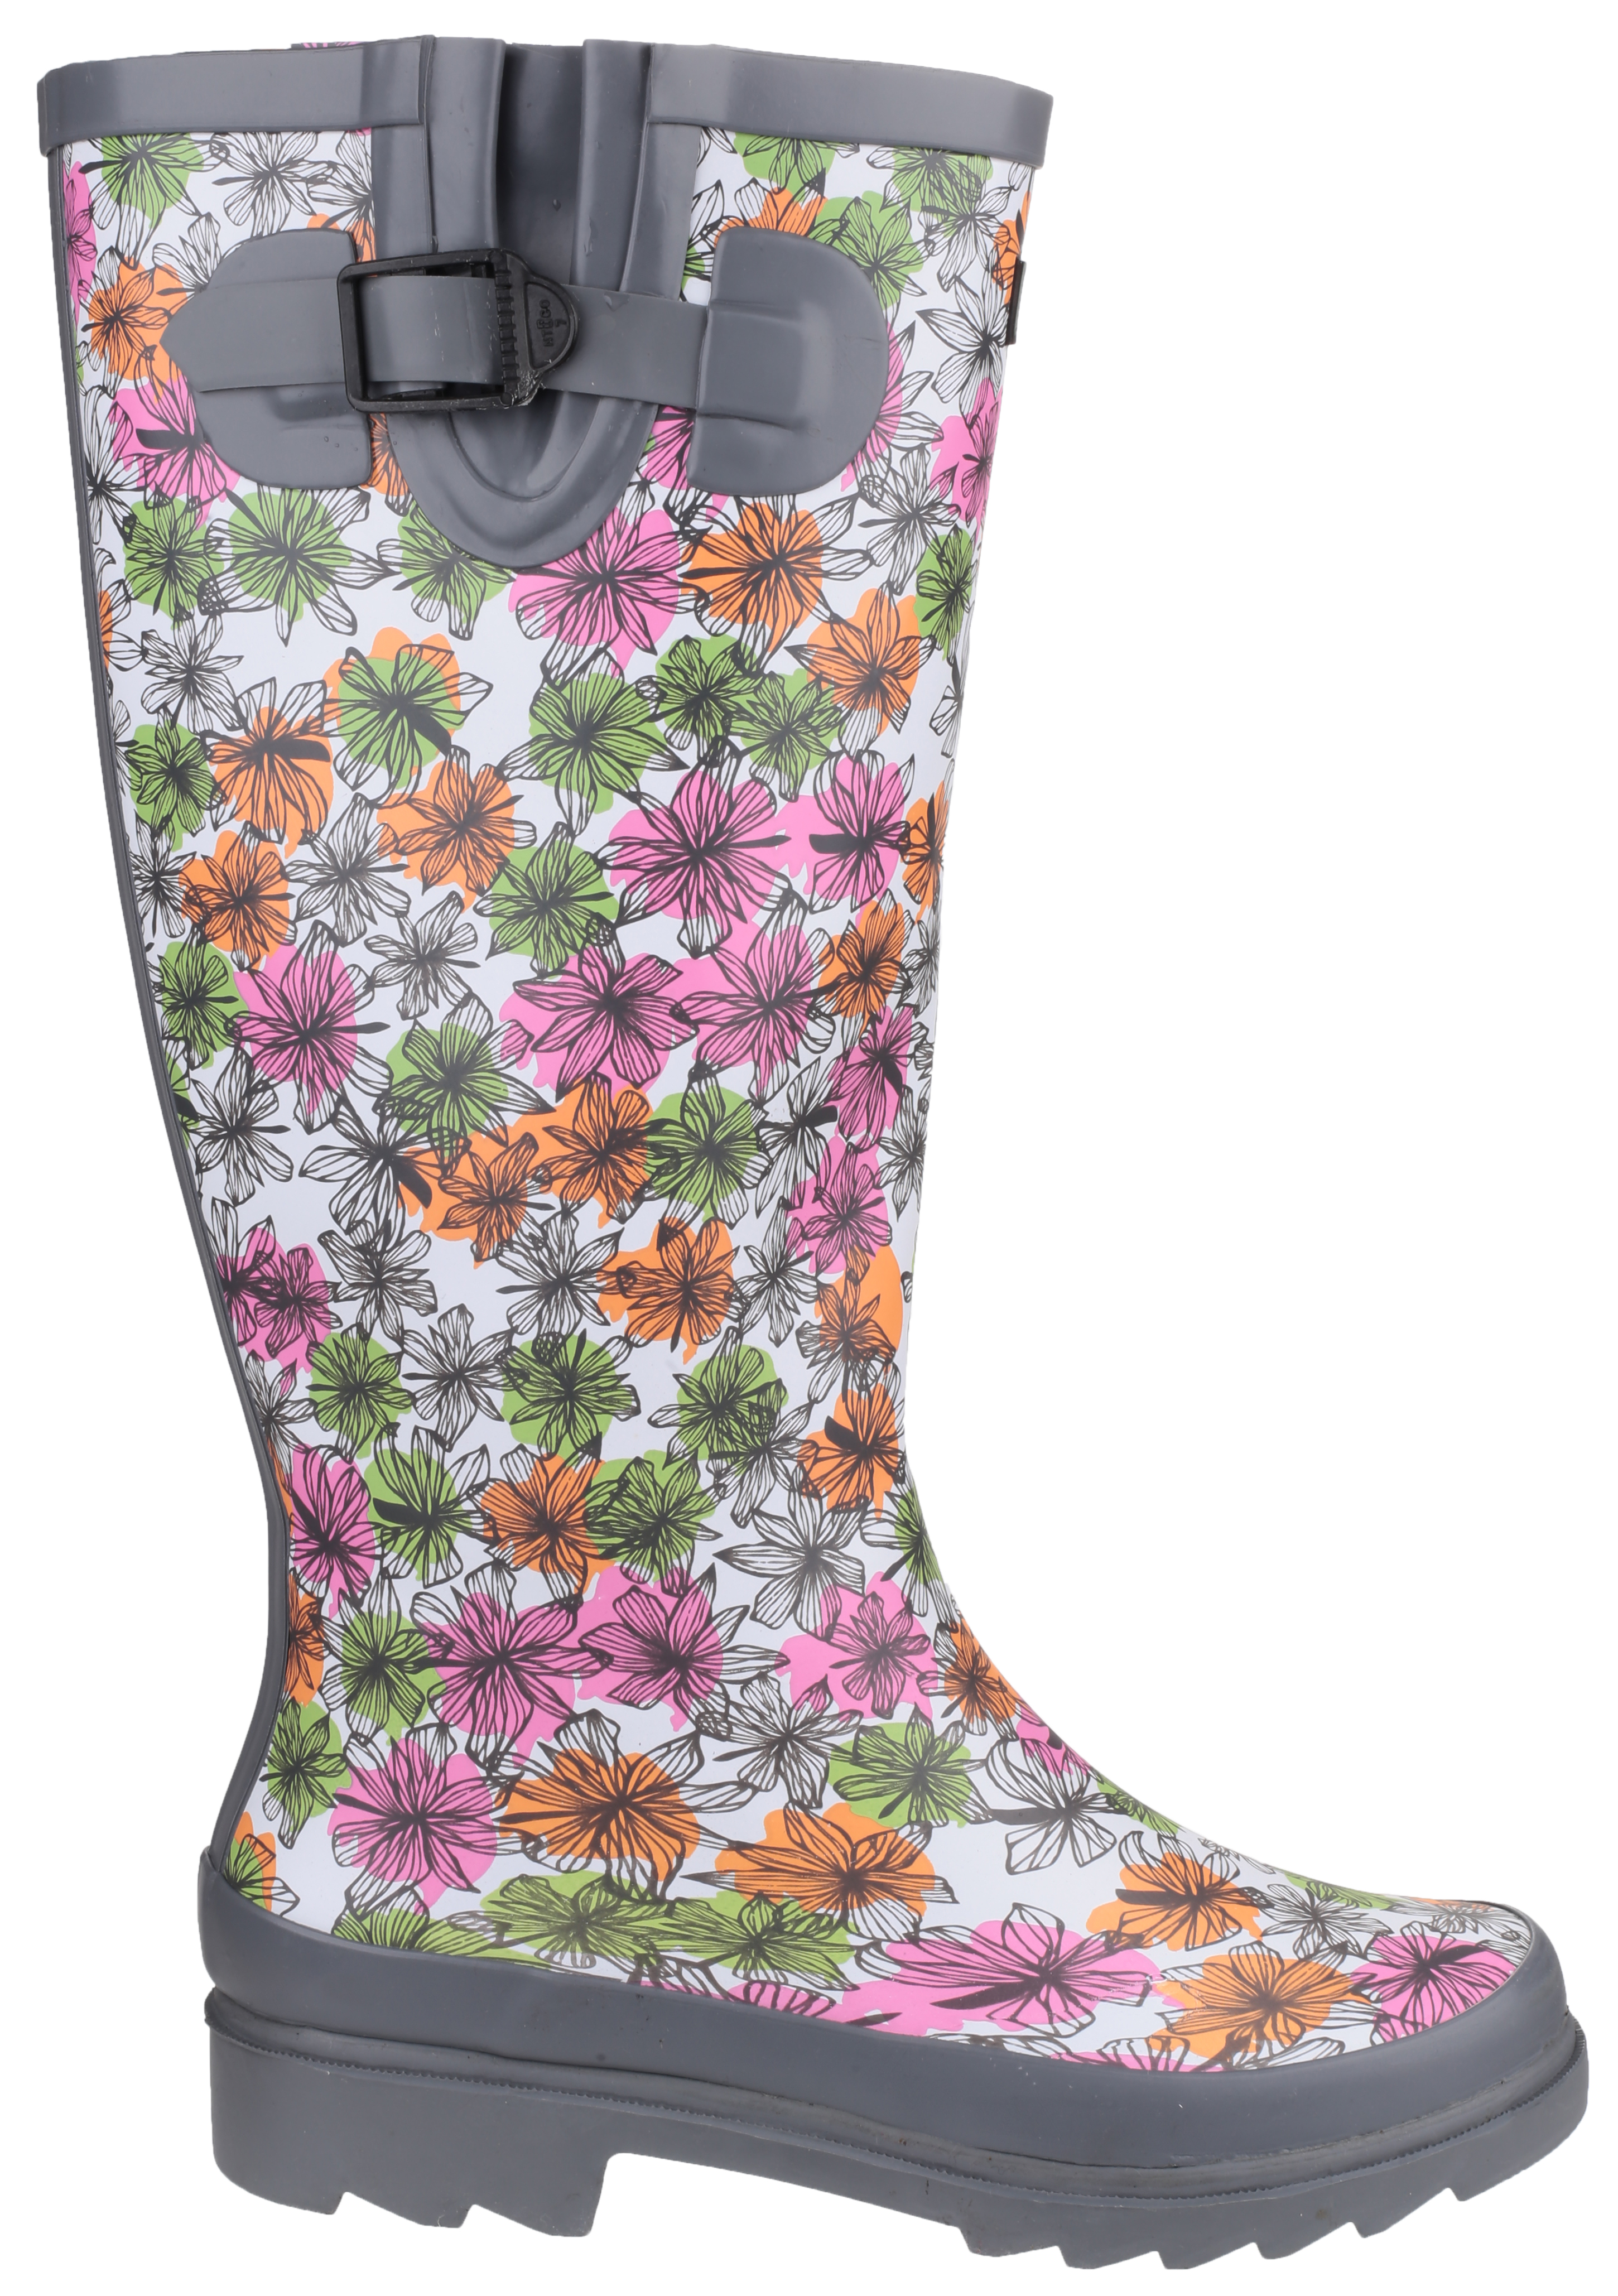 Branded Flower Power Wellington boots